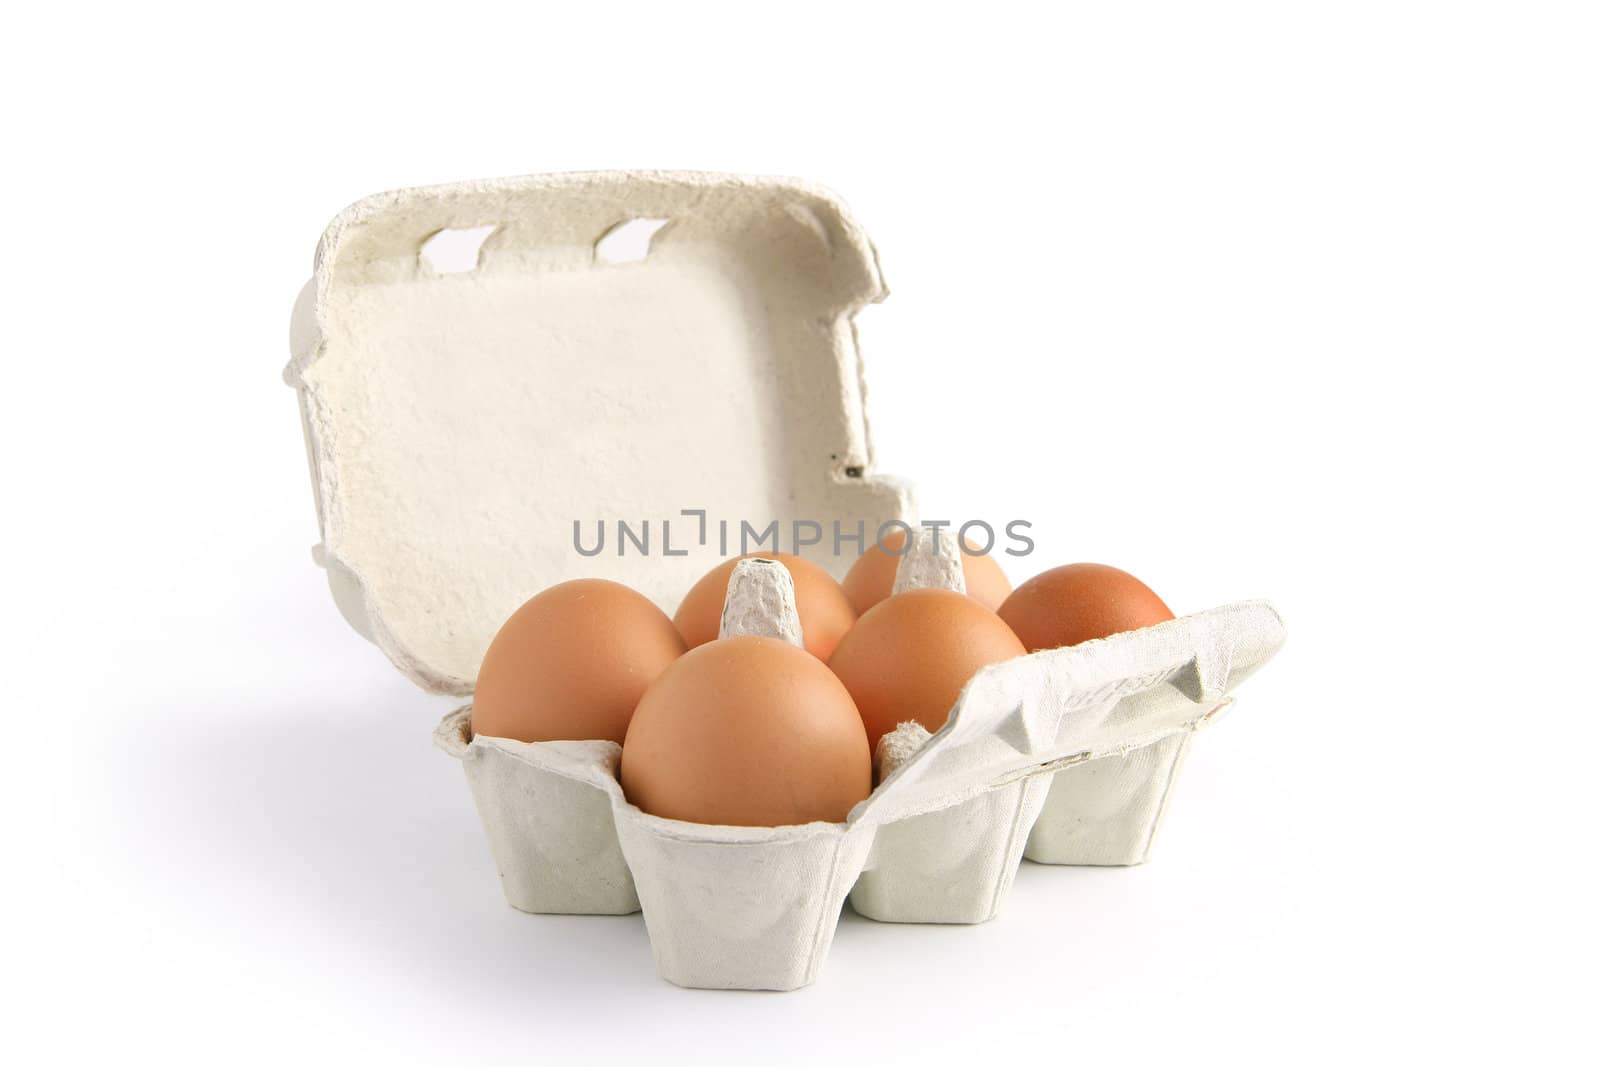 Six eggs in a box